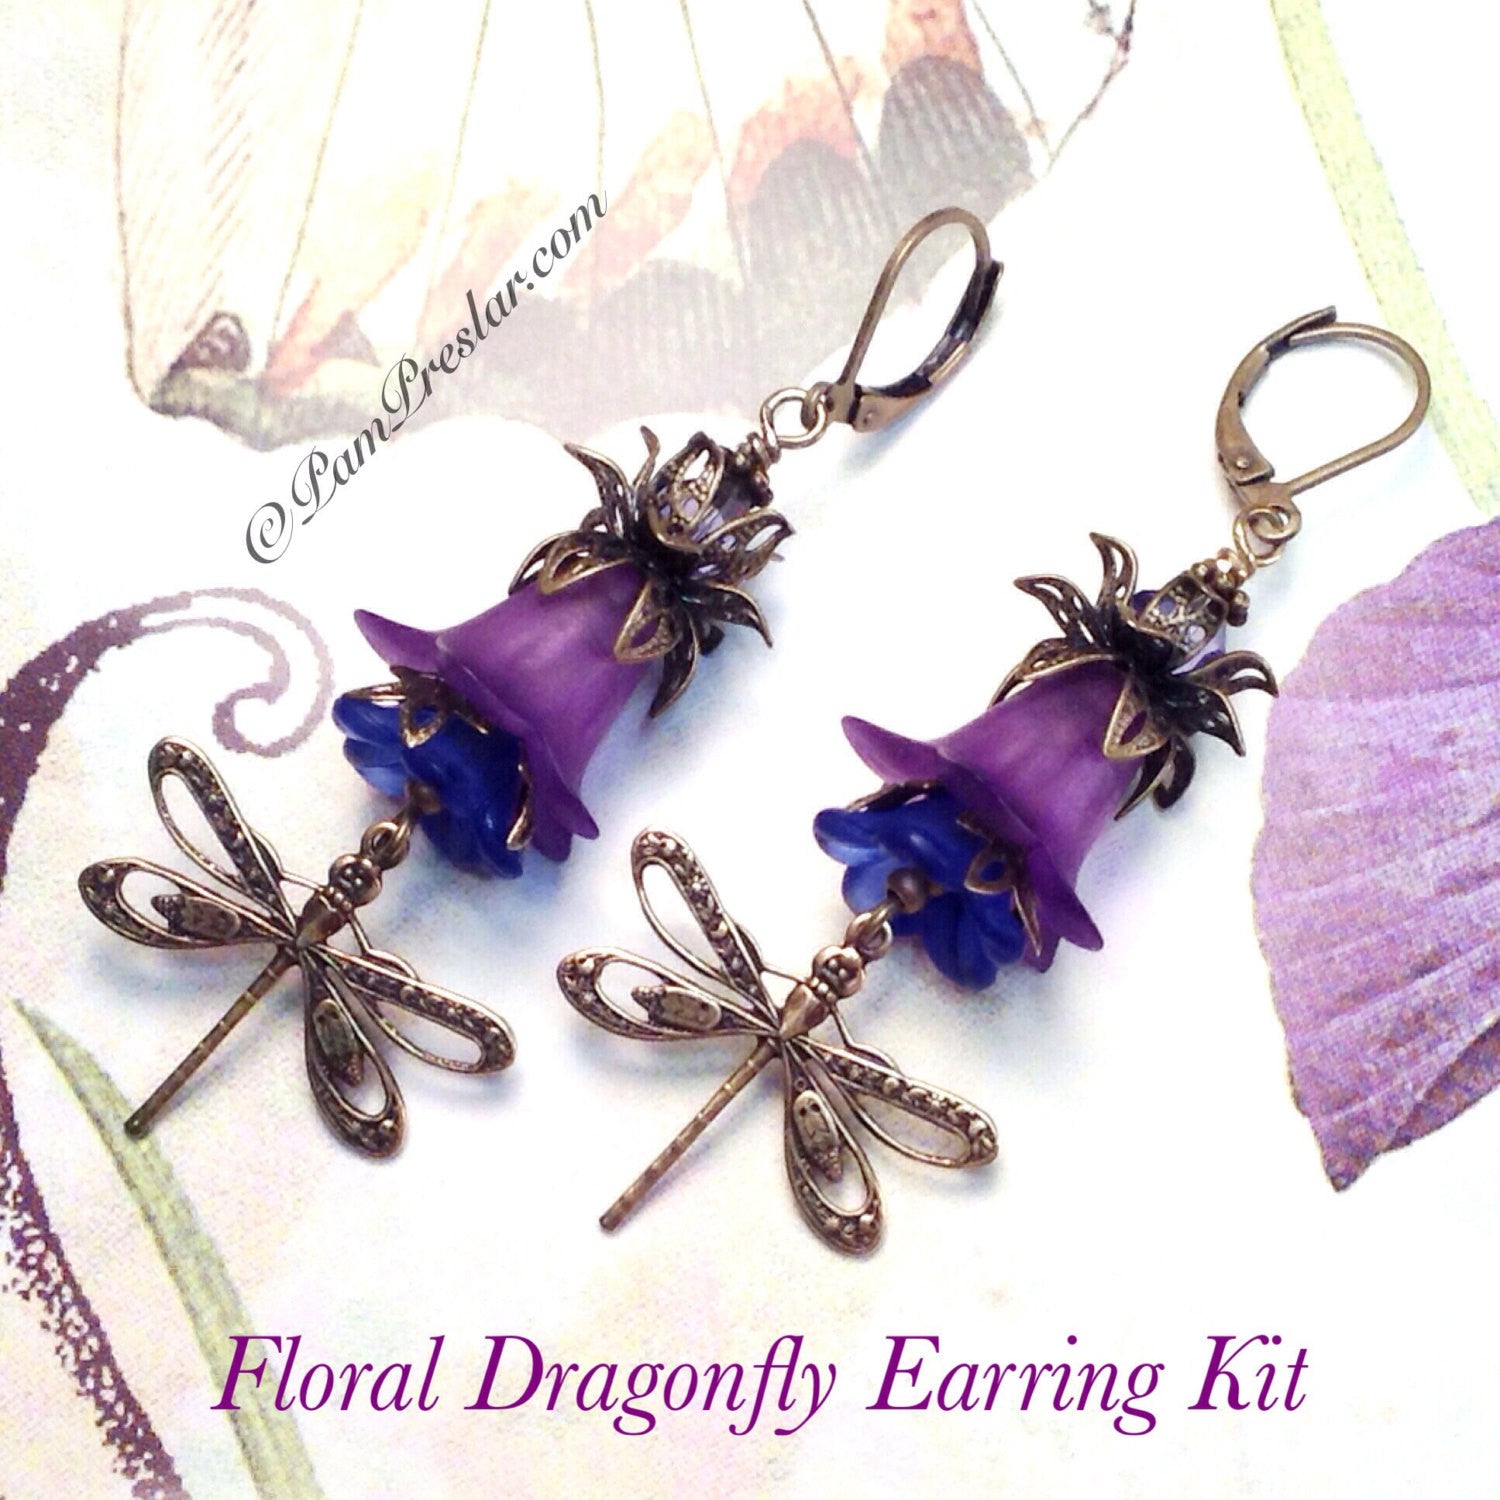 DIY Jewelry-Making Kits - Dragonfly Designs